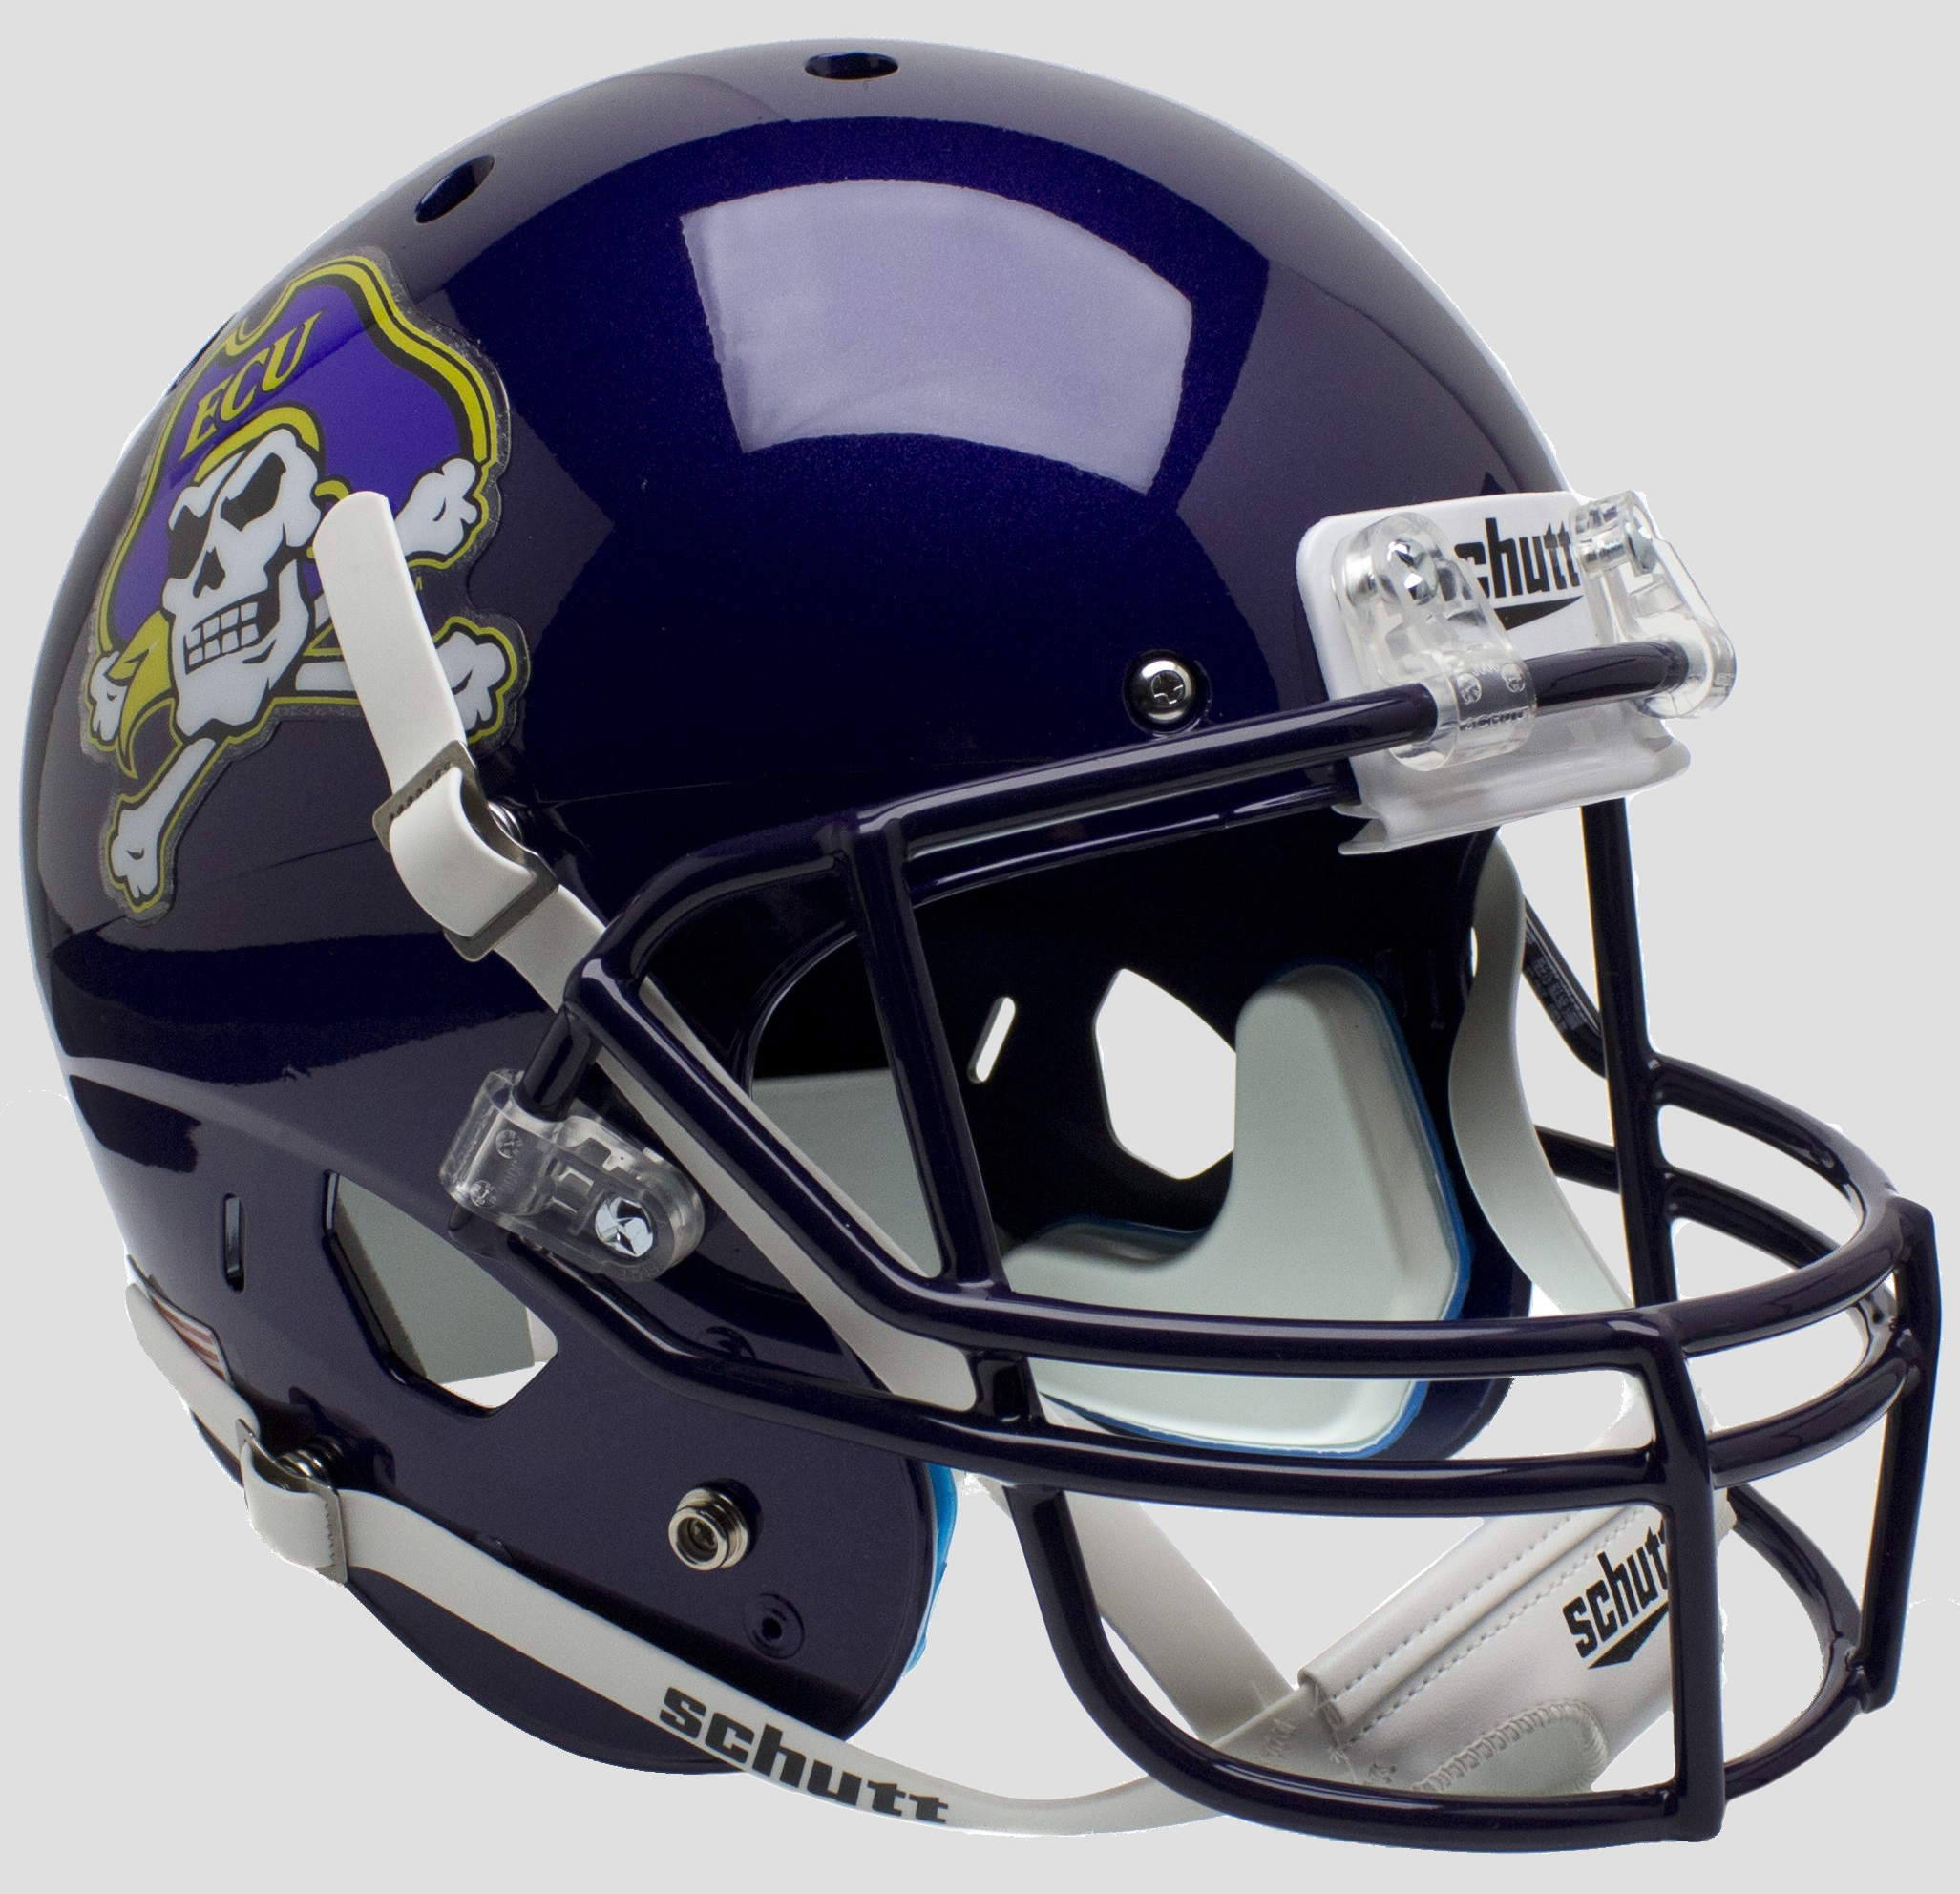 East Carolina Pirates Authentic College XP Football Helmet Schutt <B>Black Mask</B>